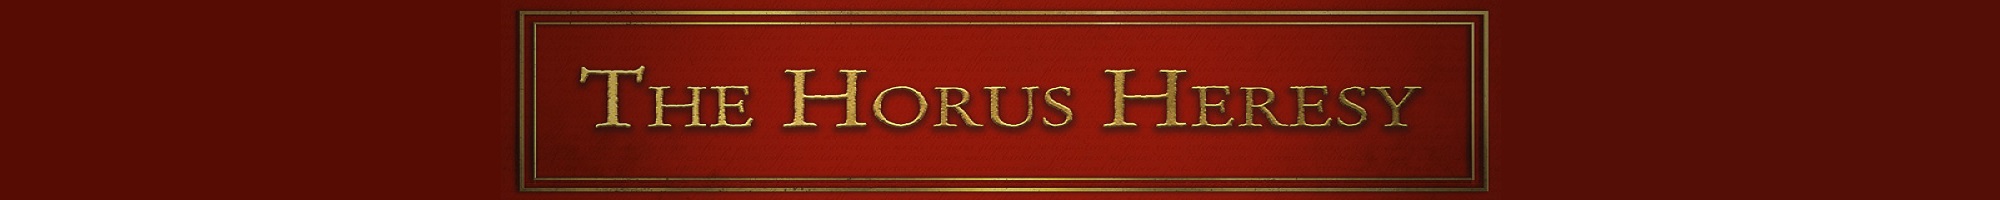 The Horus Heresy banner